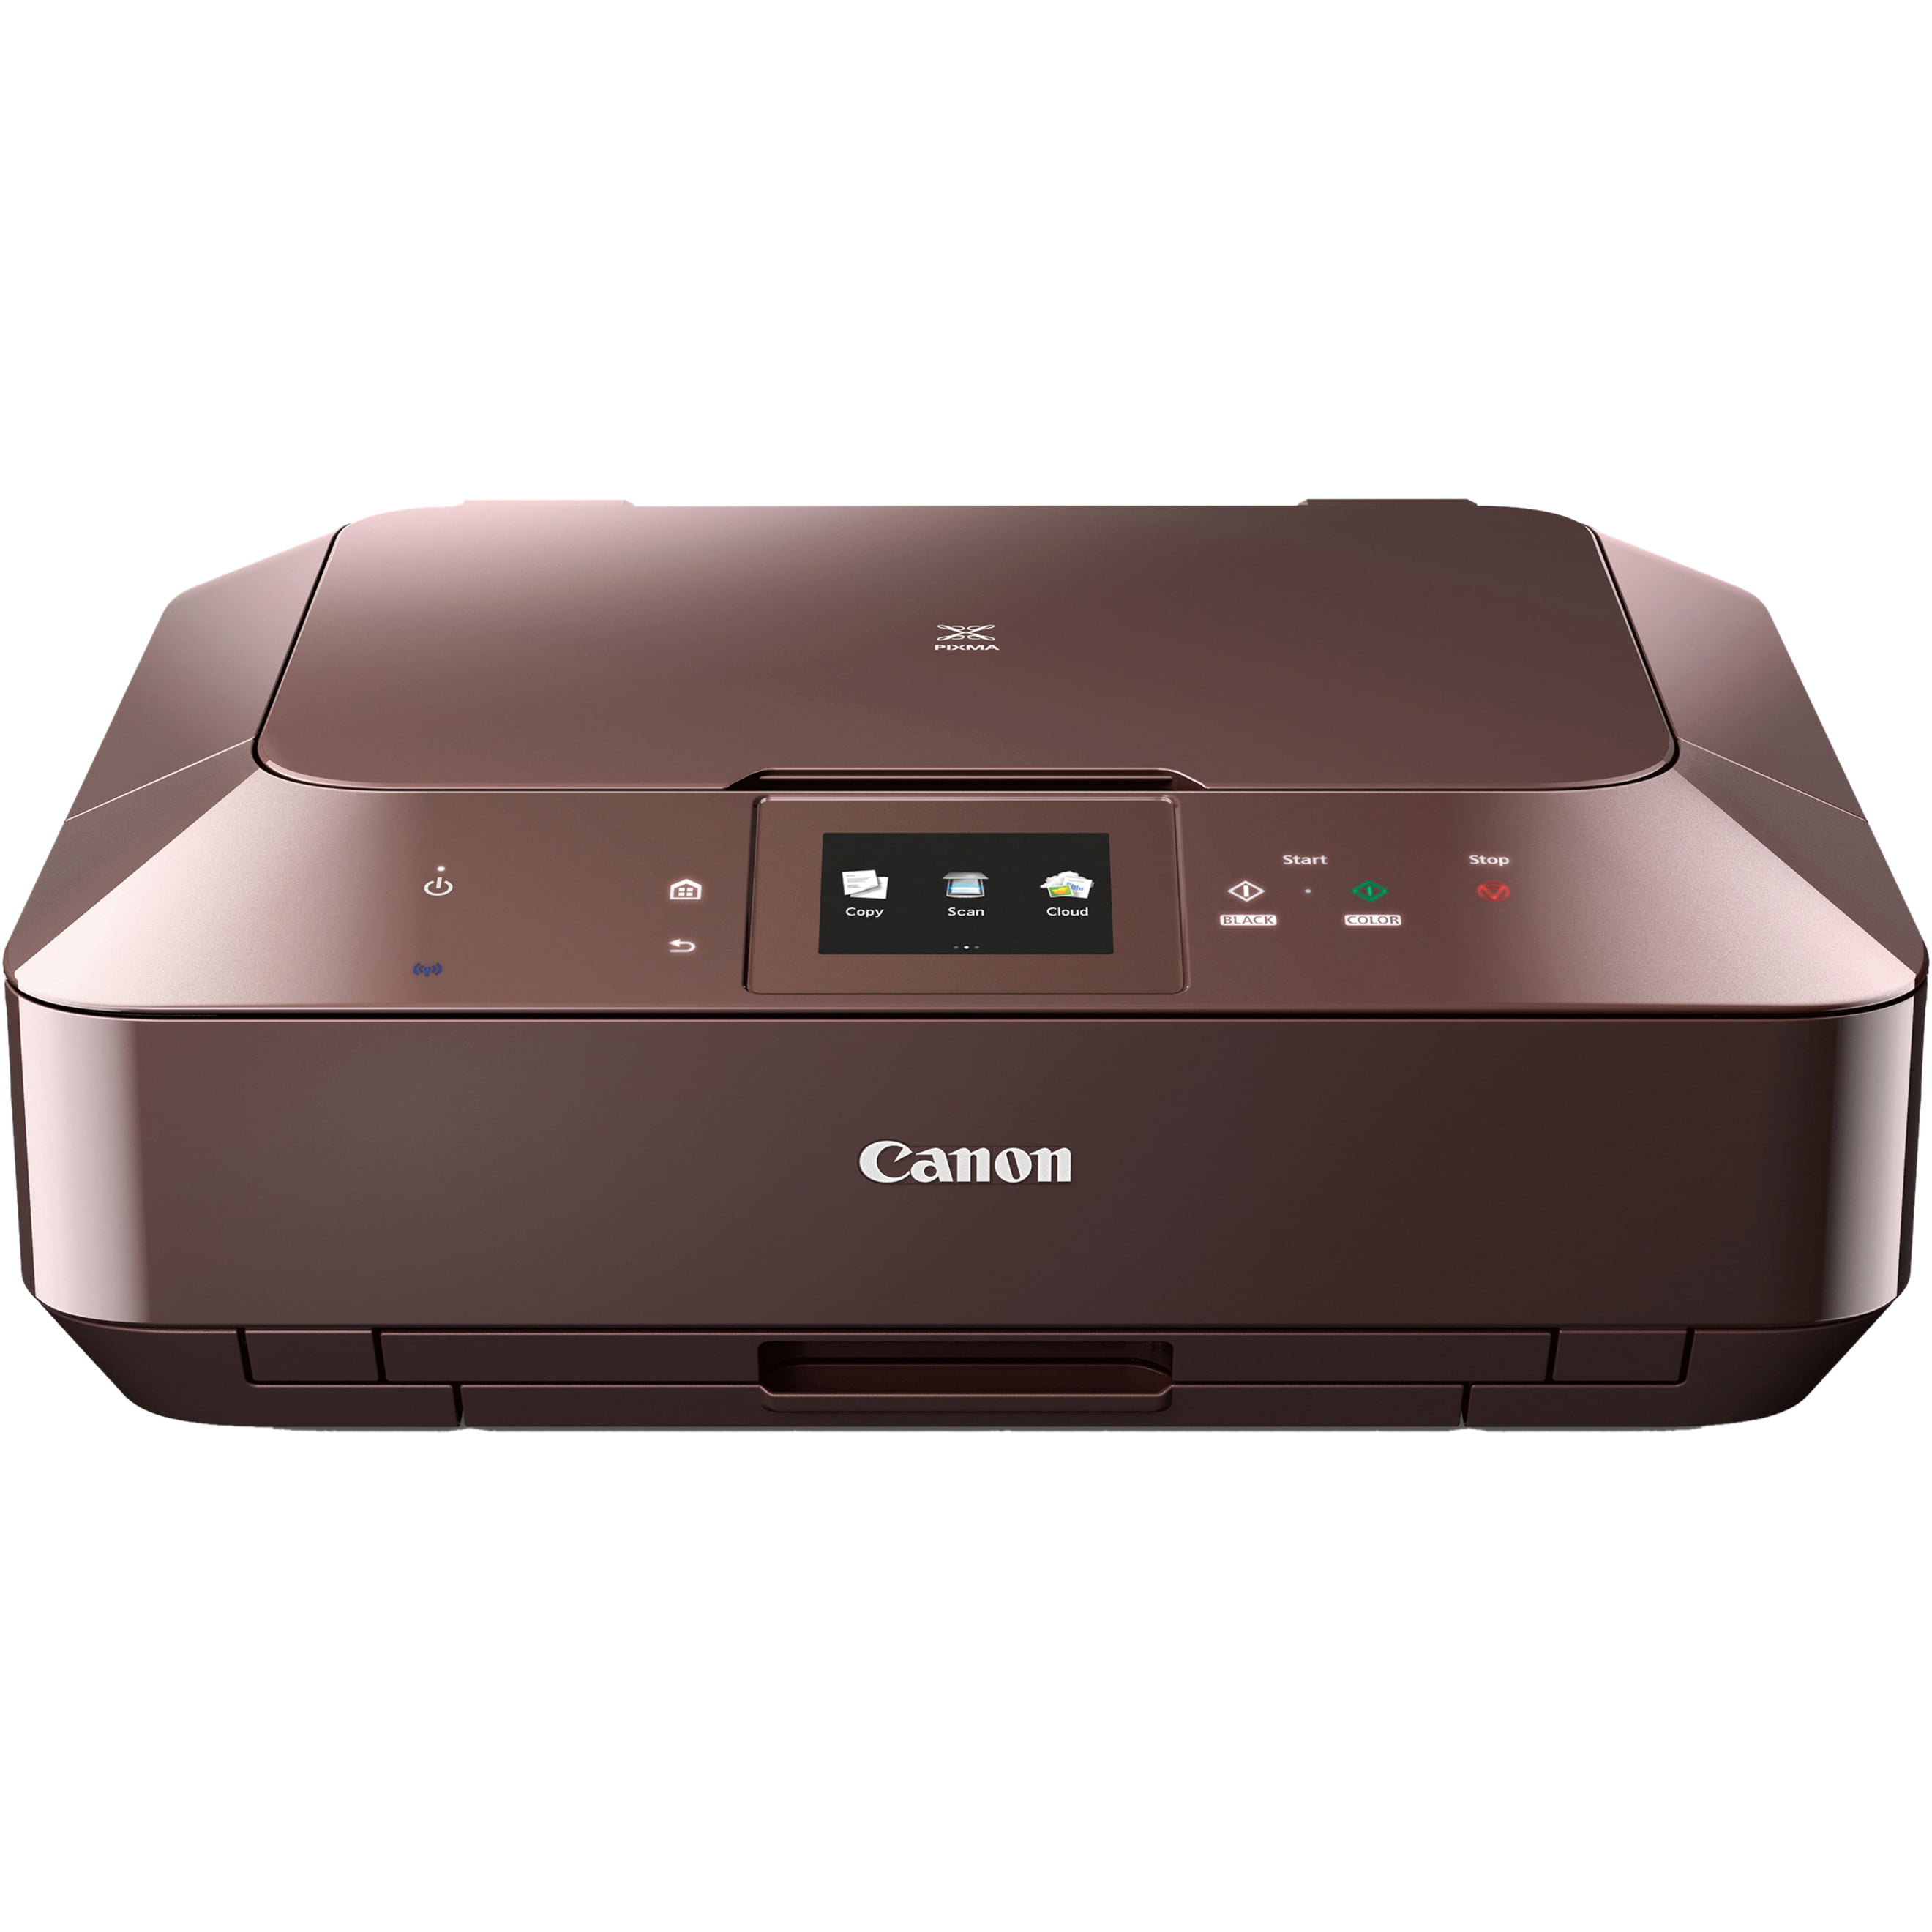 Canon MG7120 Wireless Inkjet Multifunction Printer, -